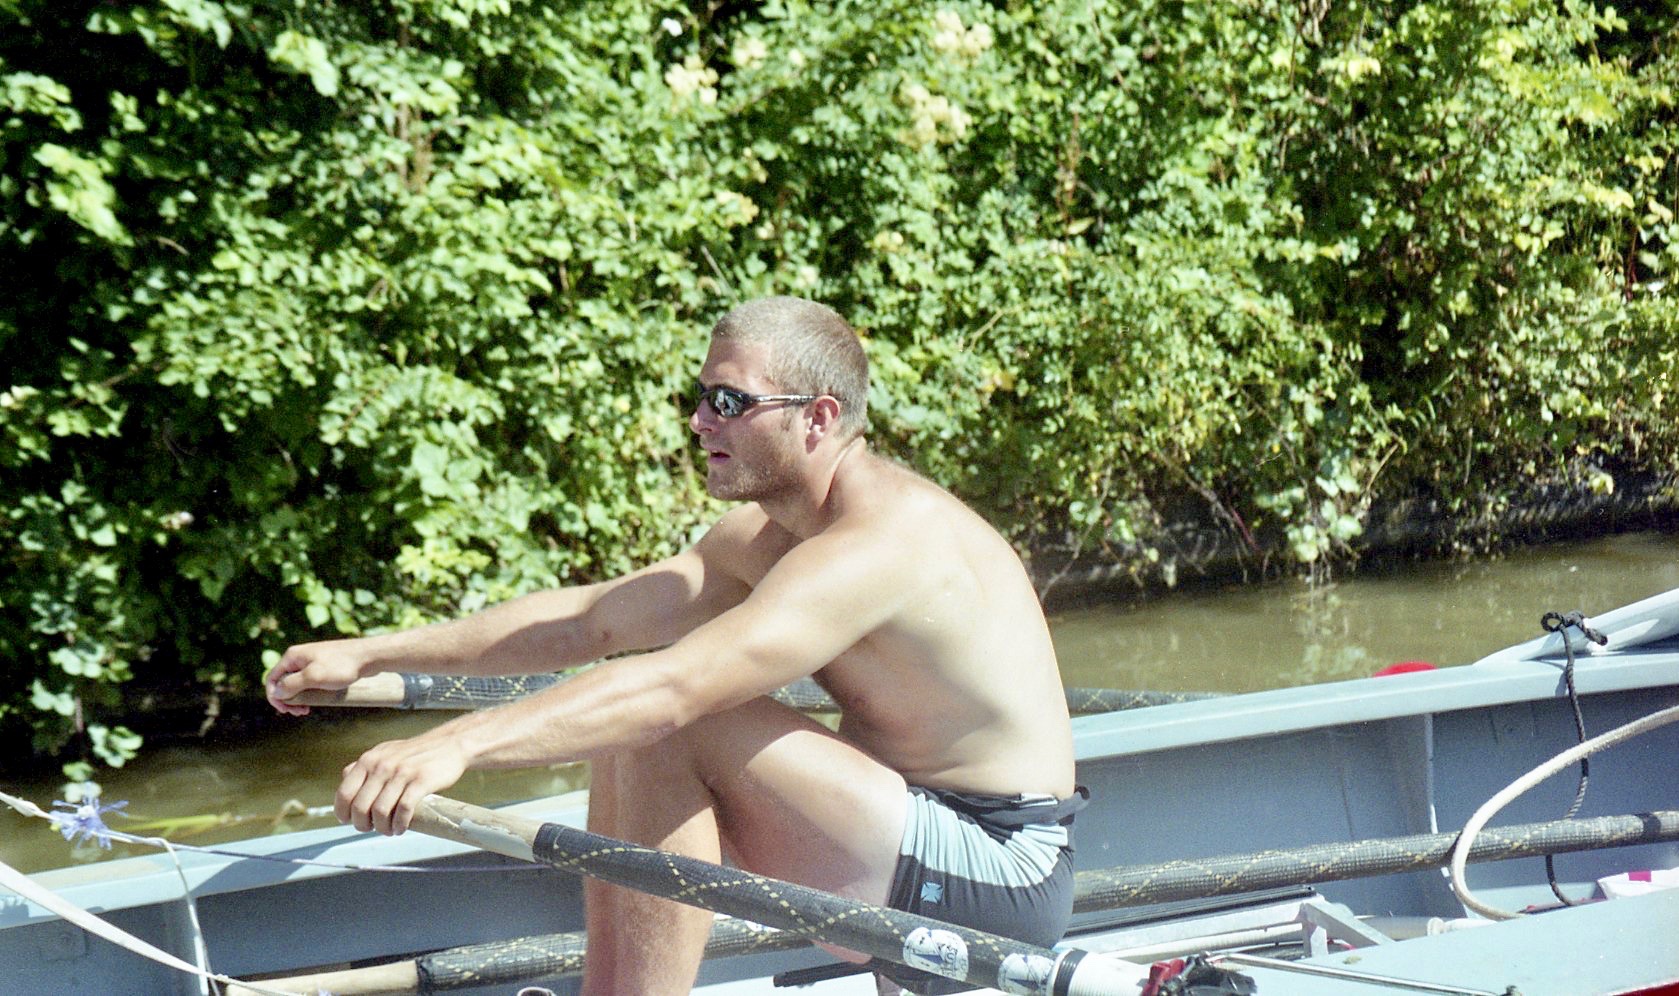 Sam rowing